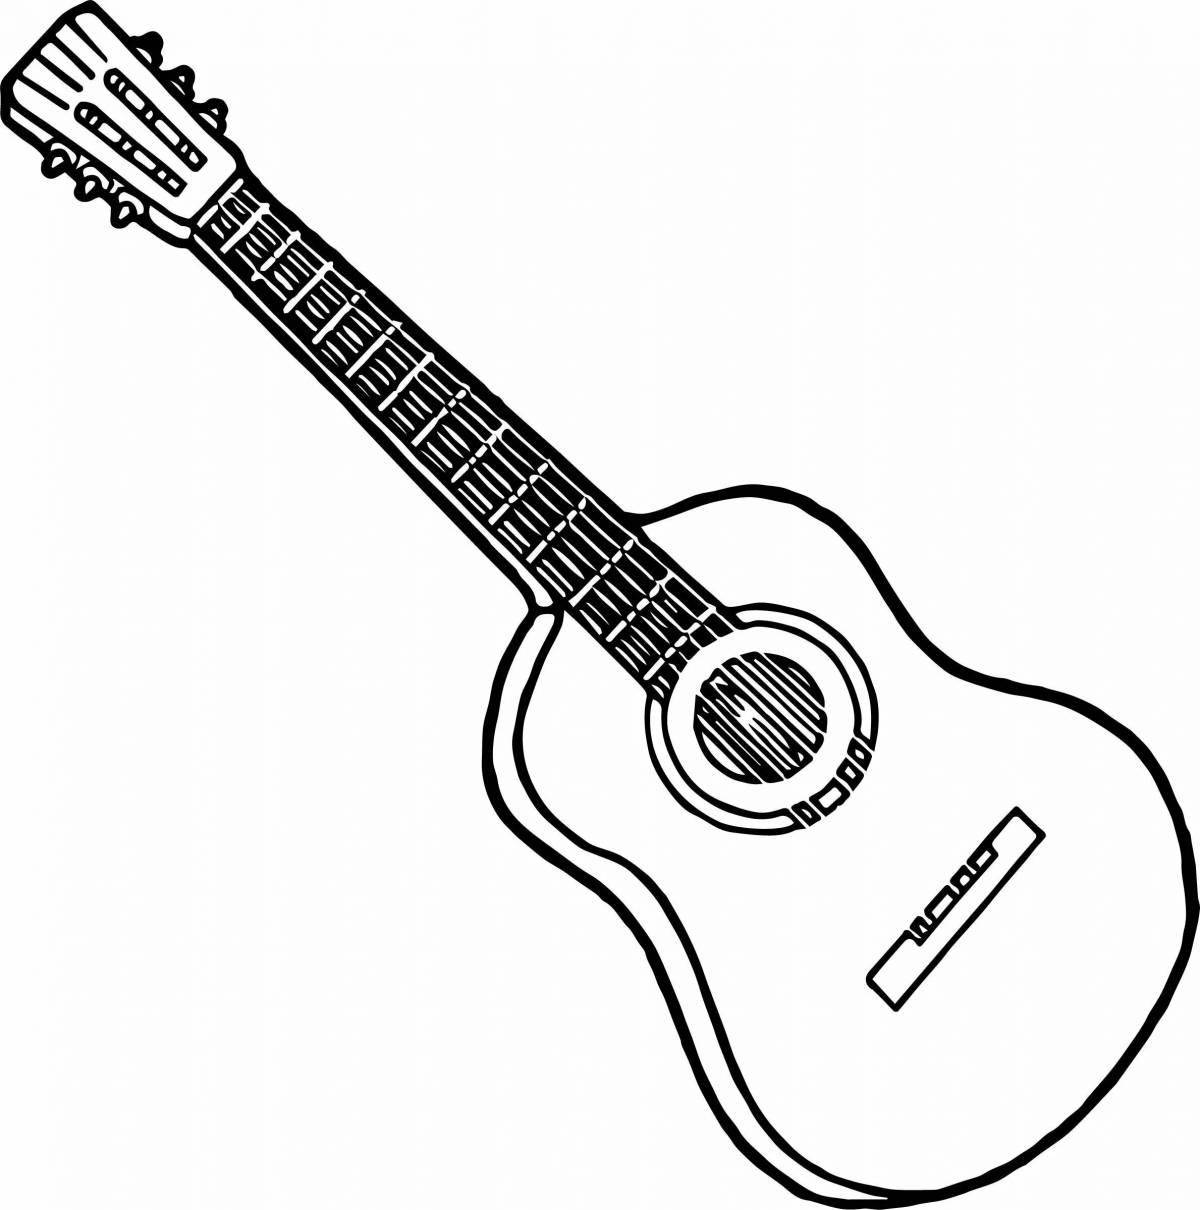 Joyful guitar coloring page